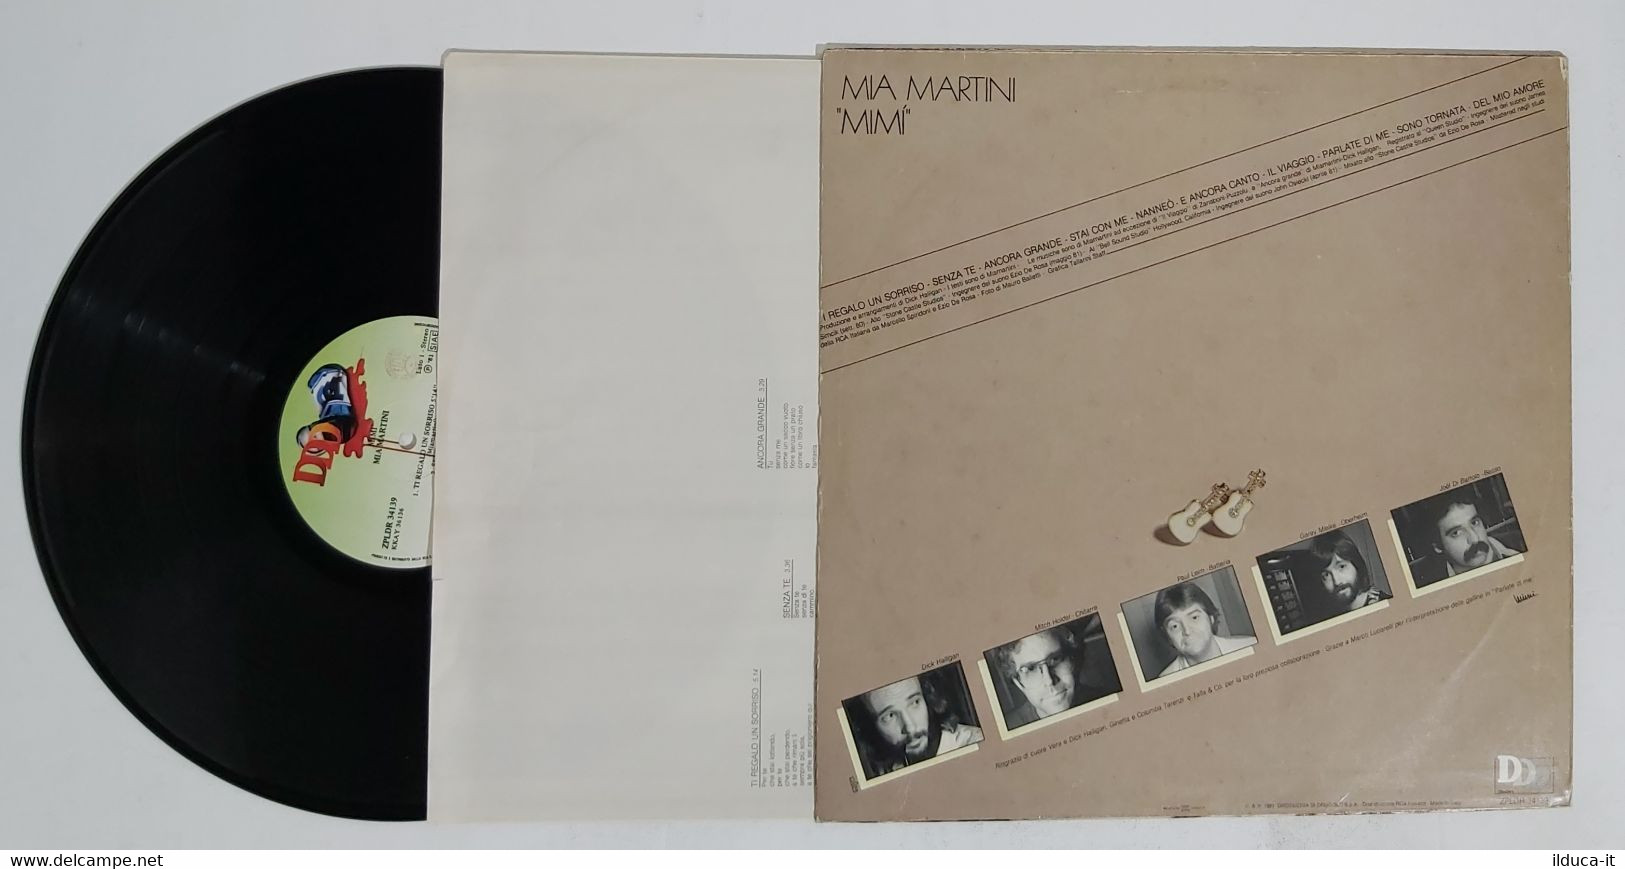 I104185 LP 33 Giri - Mia Martini - Mimì - DDD 1981 - Other - Italian Music